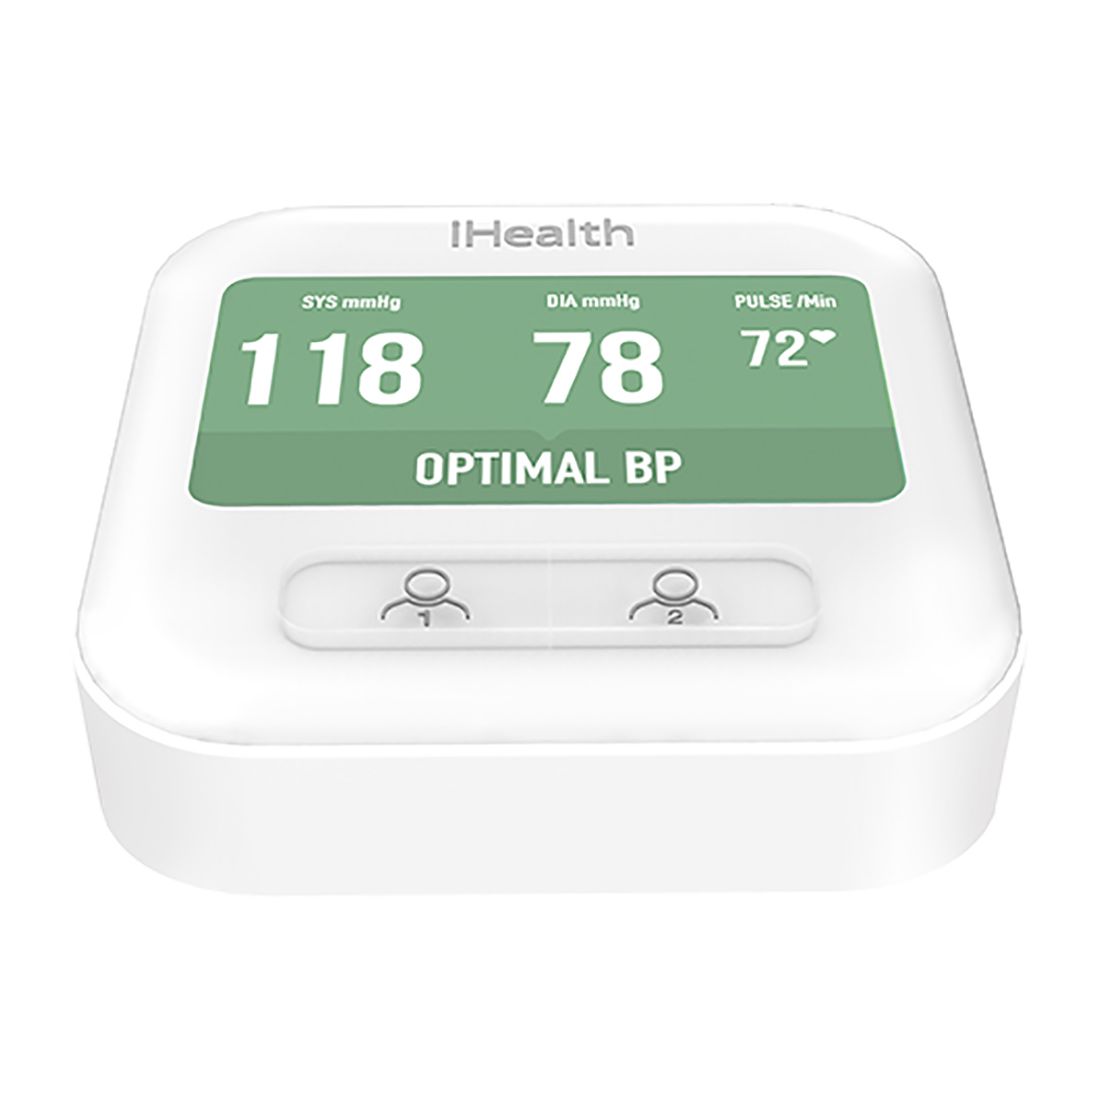 Ihealth Bpm1 Clear Smart Wi-Fi Arm Blood Pressure Monitor With Display